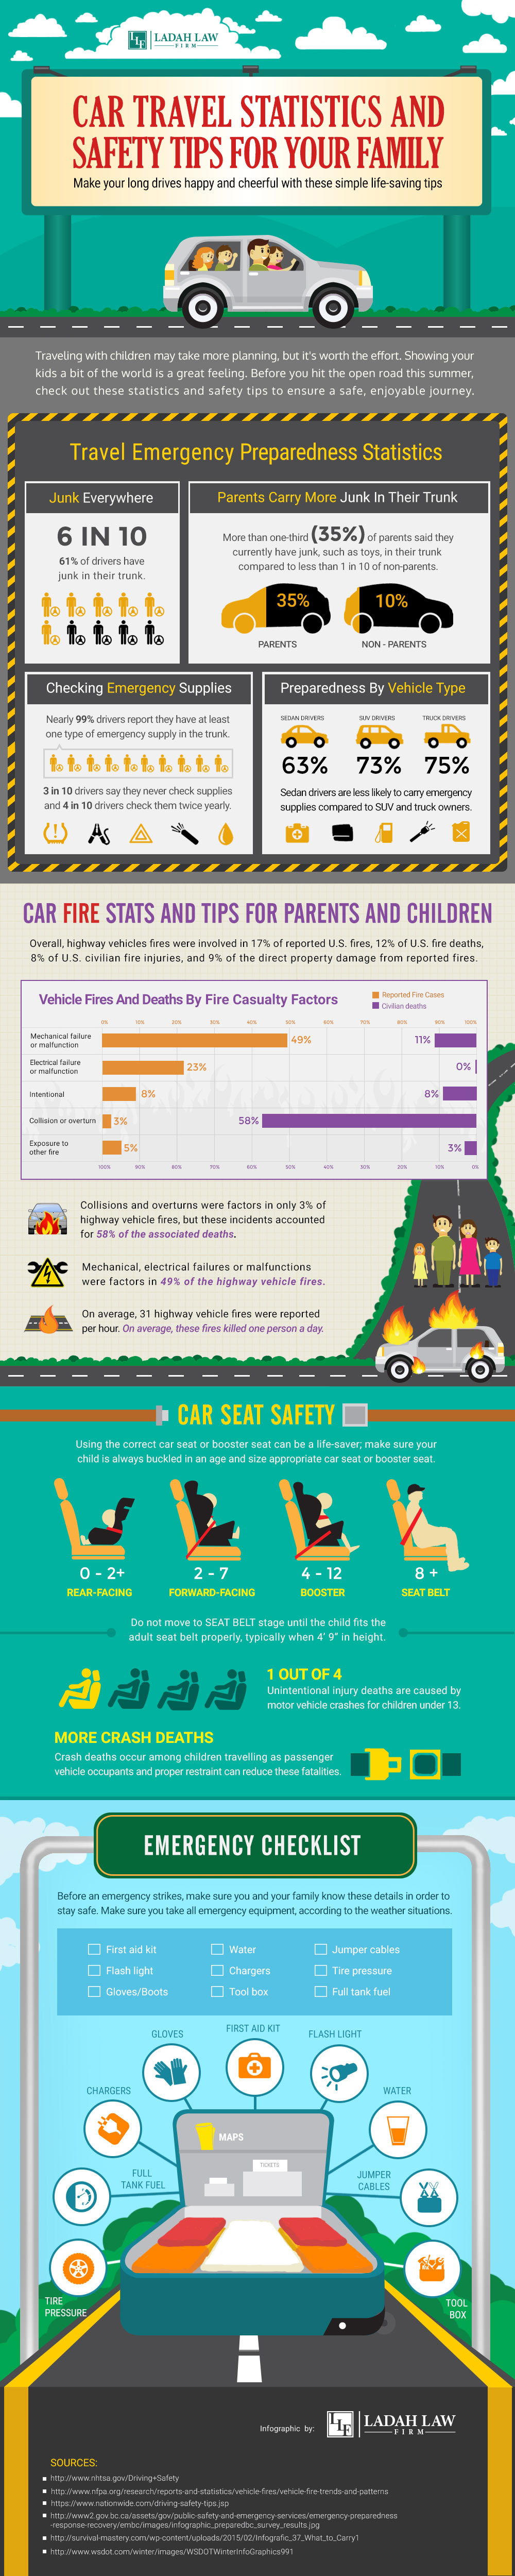 https://www.ladahlaw.com/wp-content/uploads/2016/03/Las-Vegas-Child-Travel-Safety-Tips-Statistics.jpg